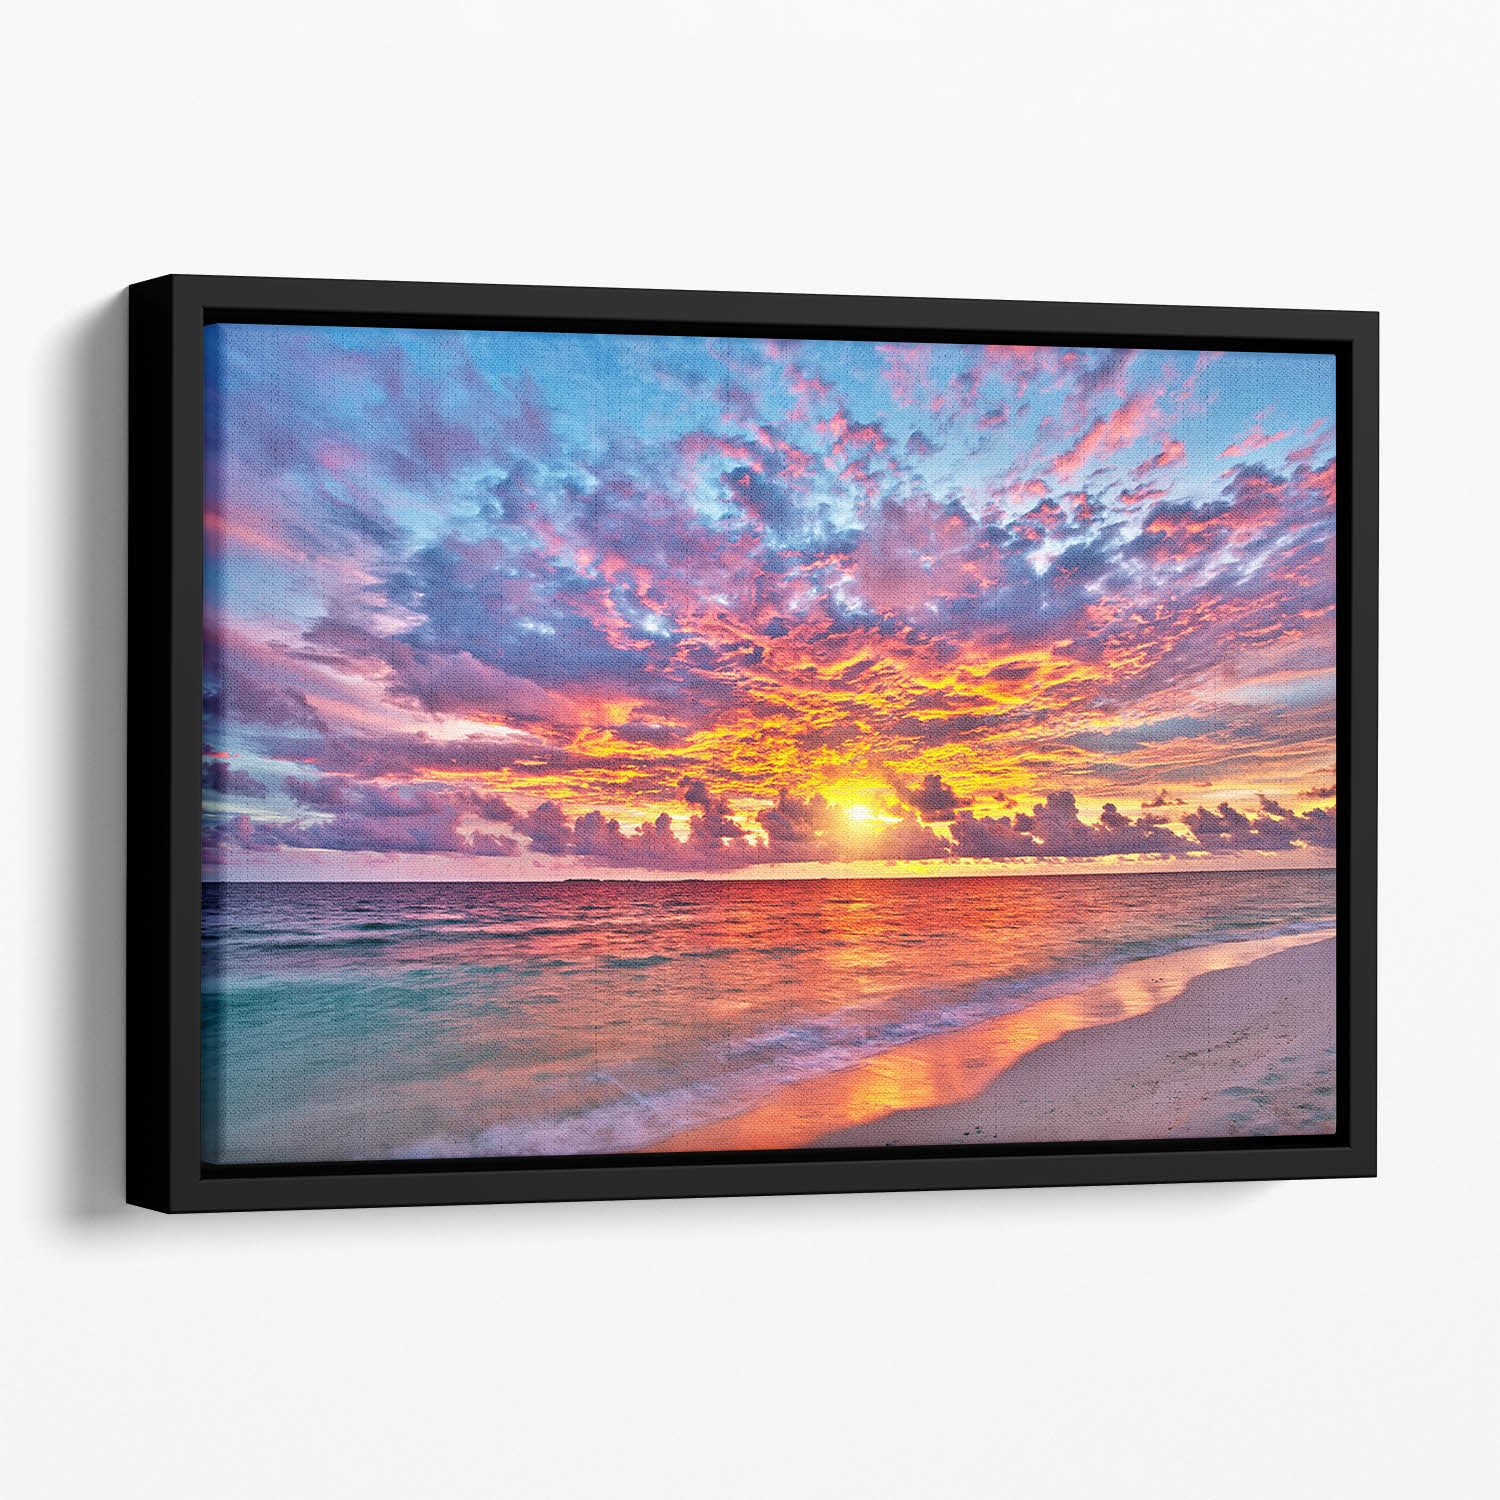 Colorful sunset over ocean on Maldives Floating Framed Canvas